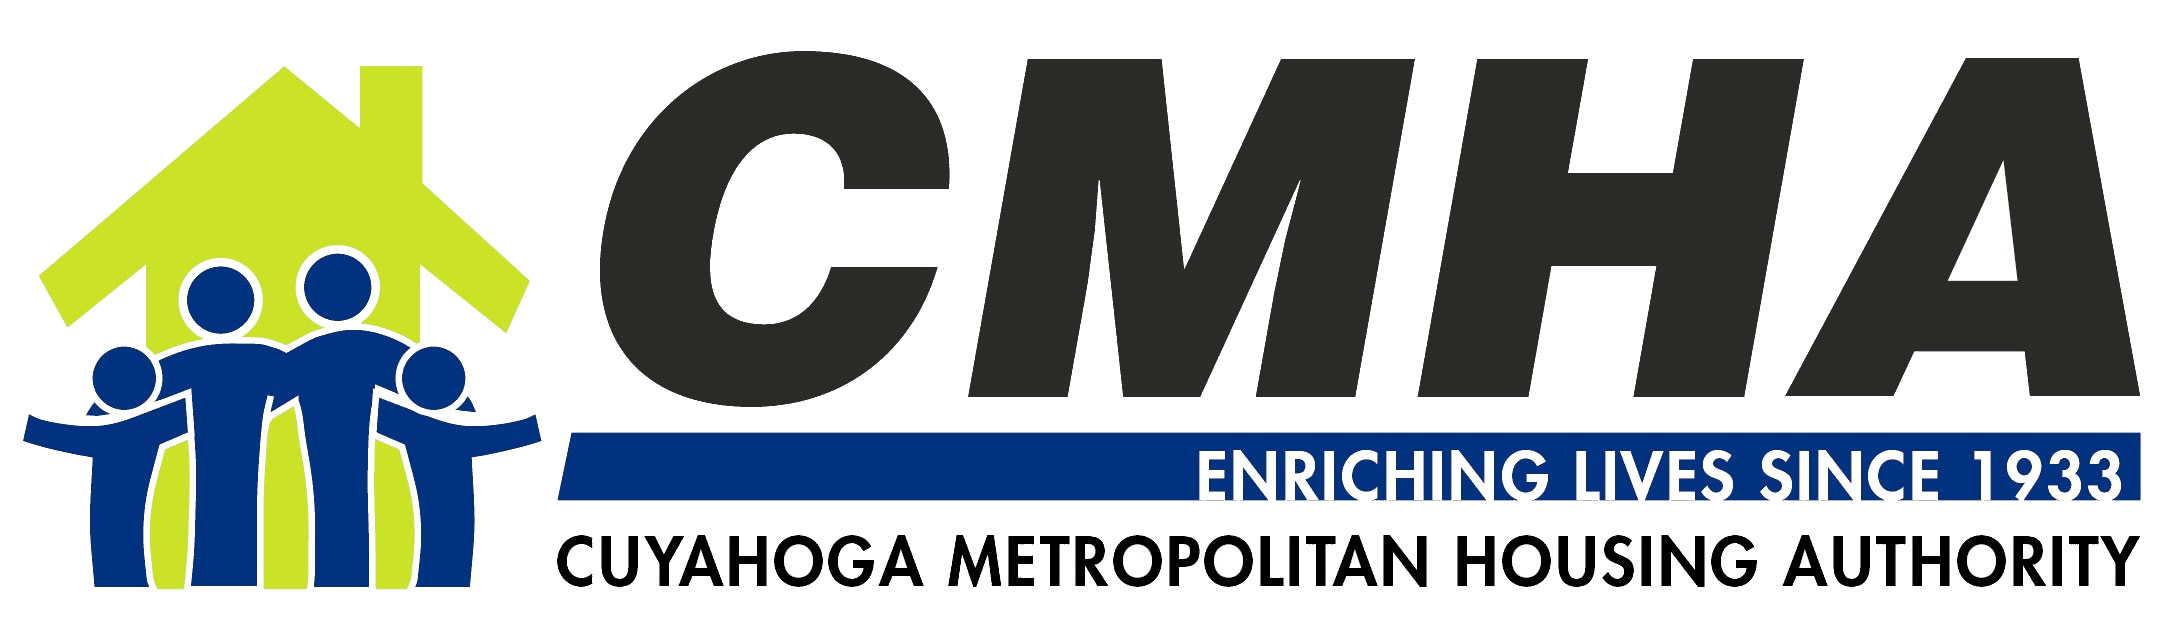 Cuyahoga Metropolitan Housing Authority Logo